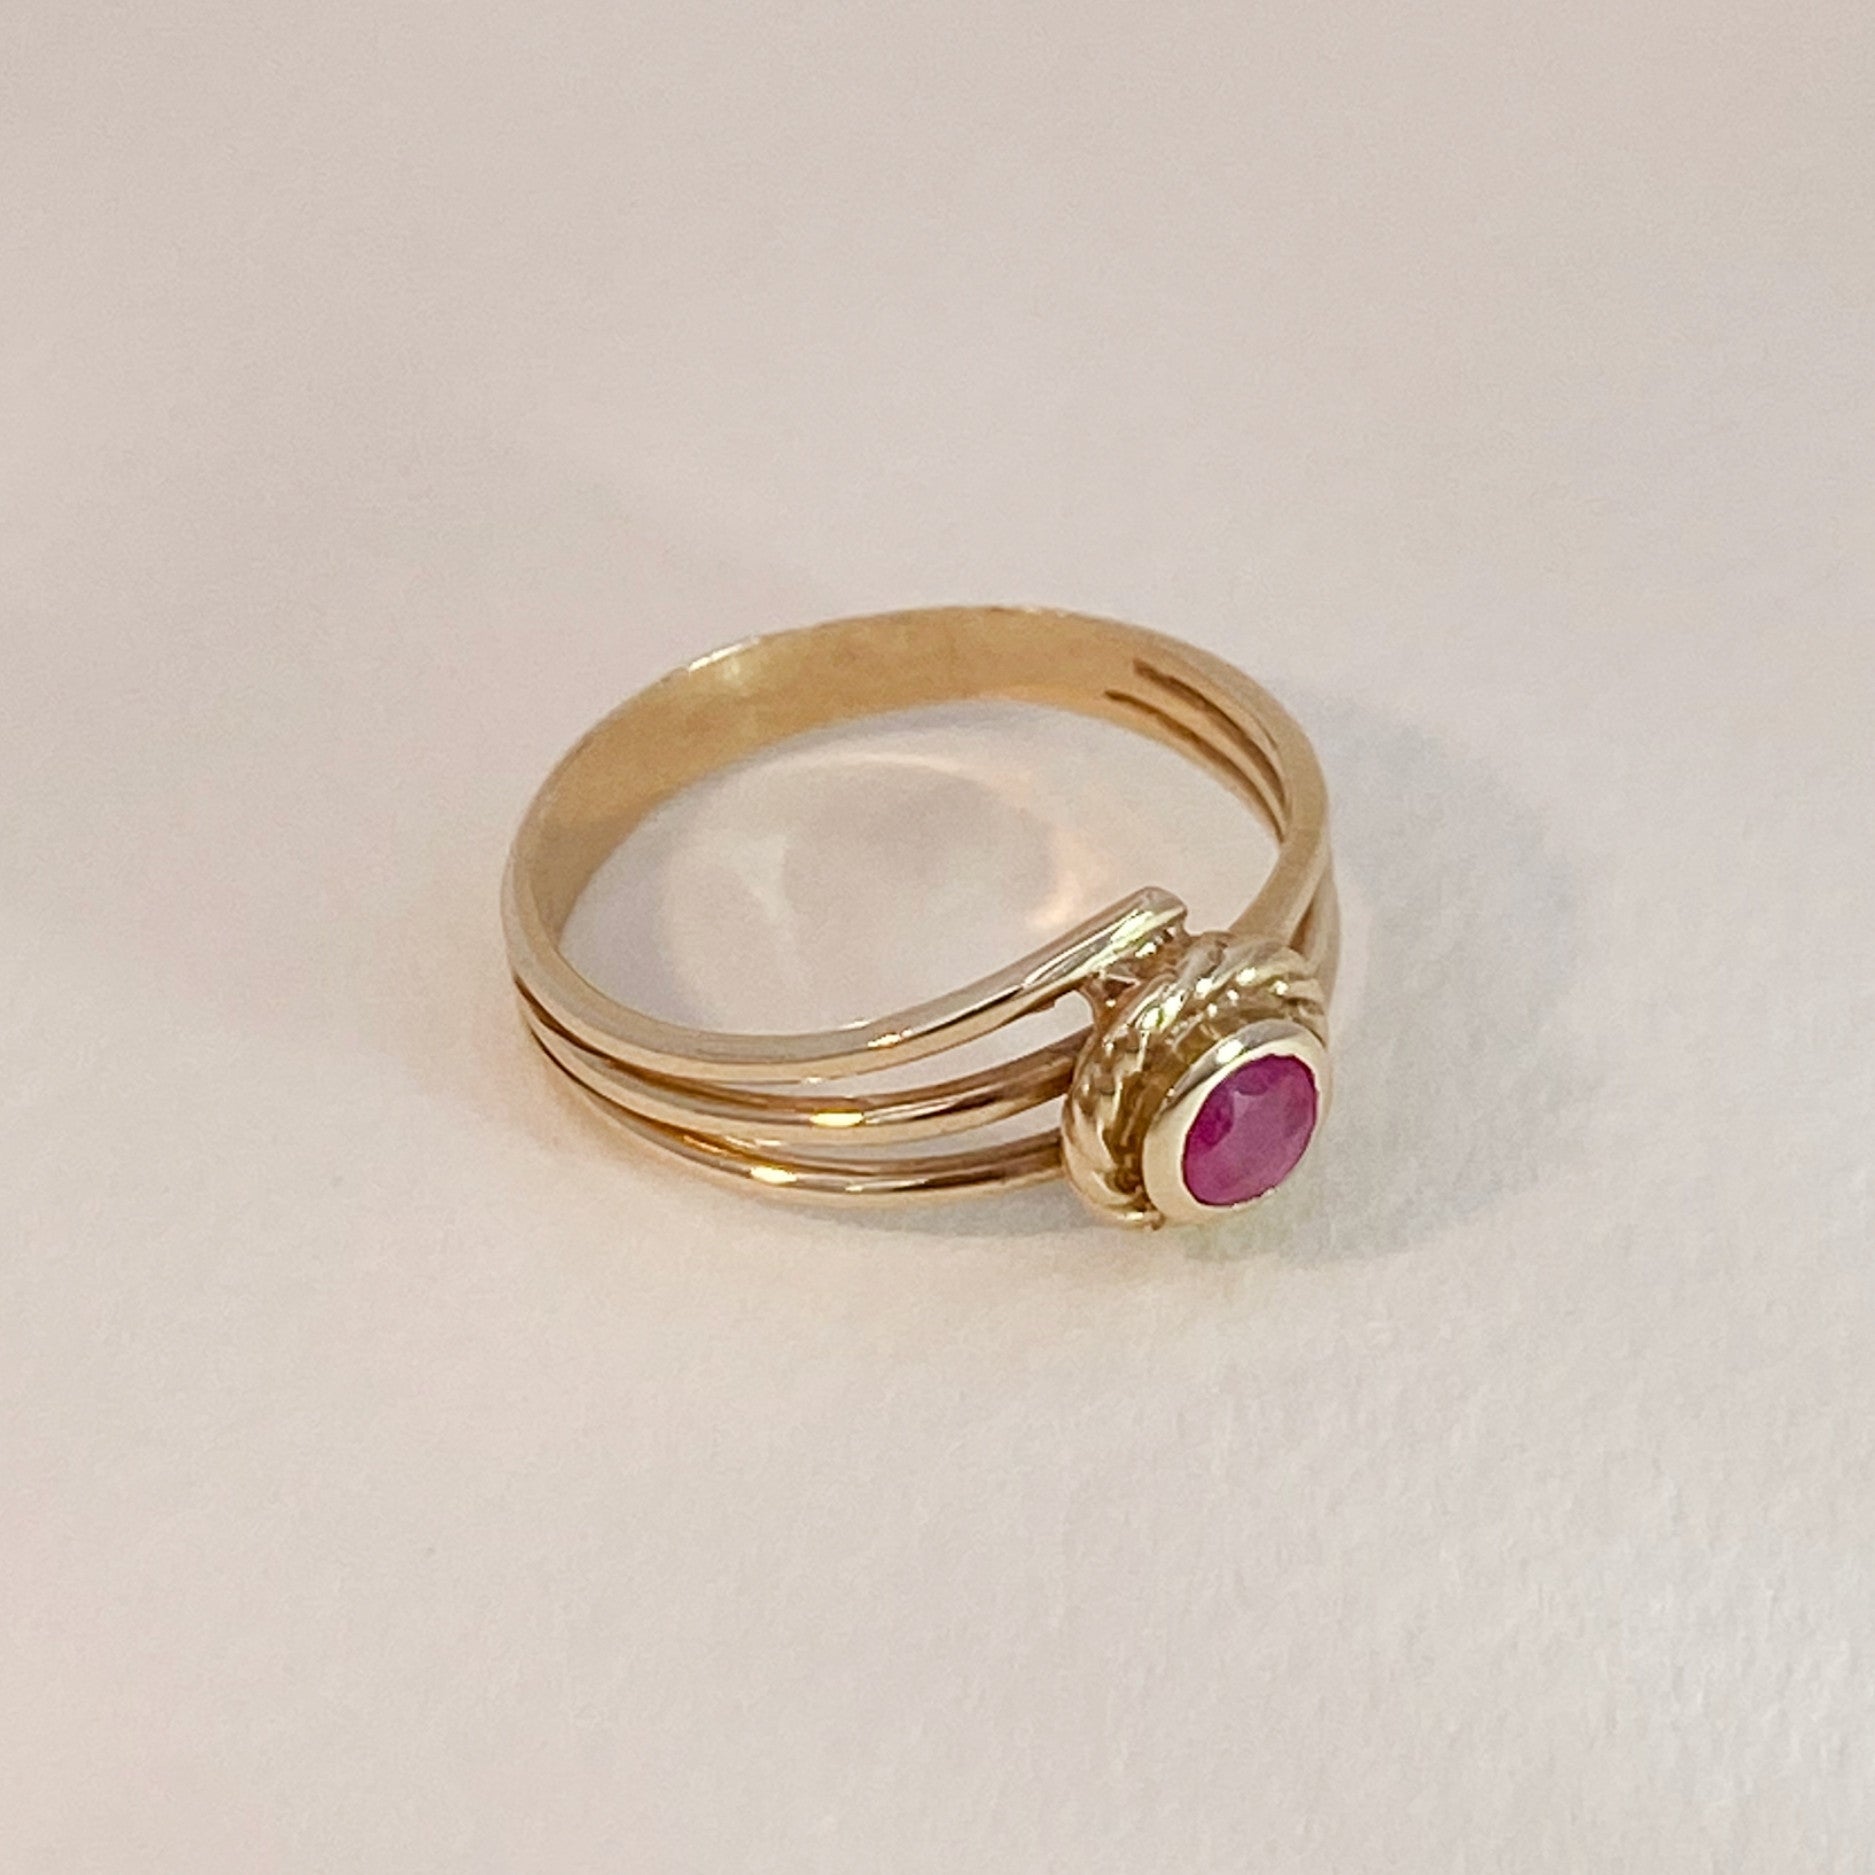 Vintage elegant pink sapphire ring